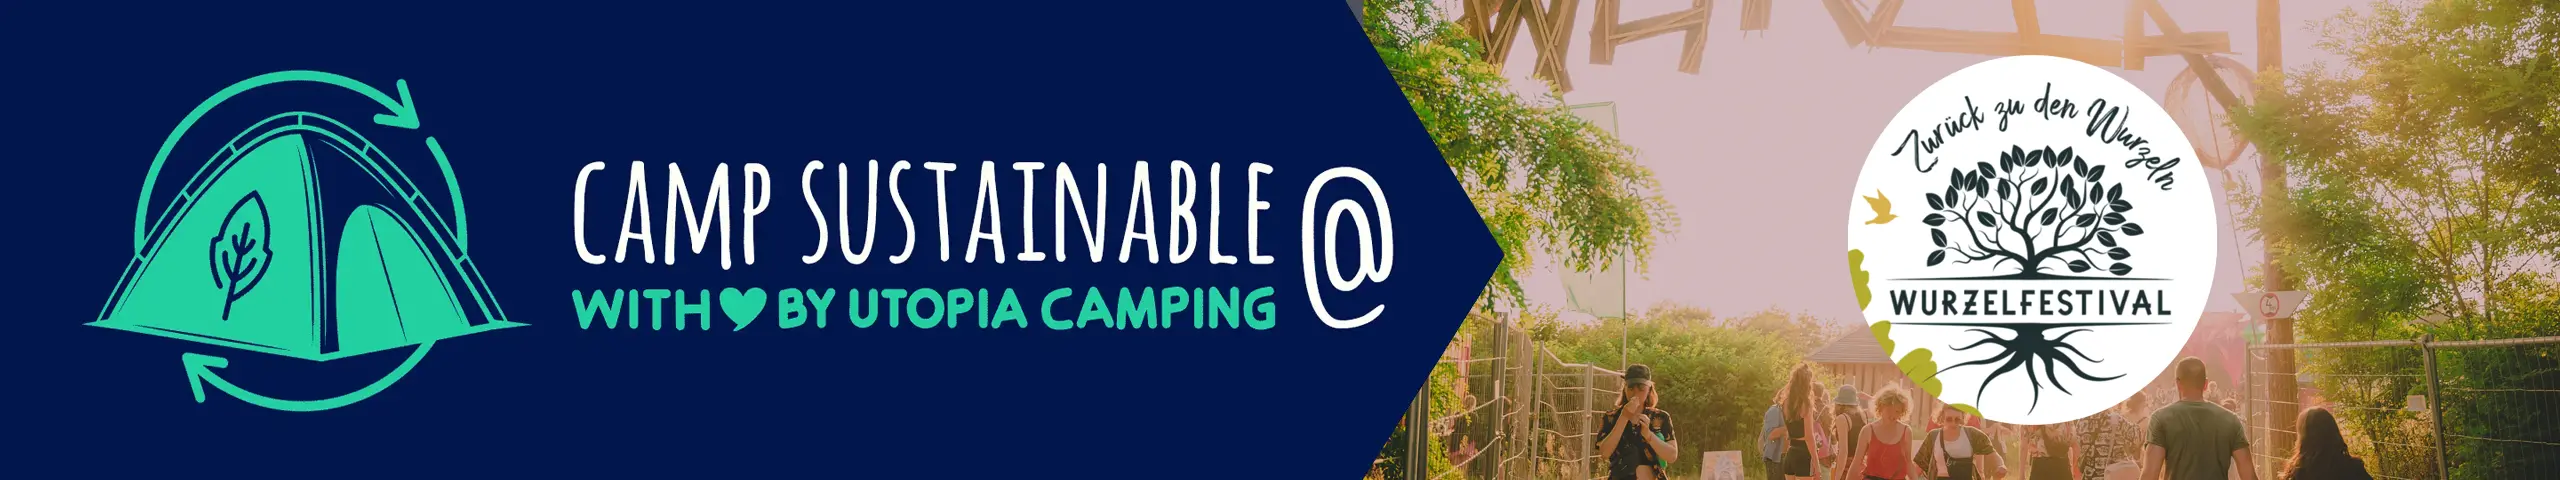 Wurzelfestival rent a tent, Wurzelfestival camping accessories